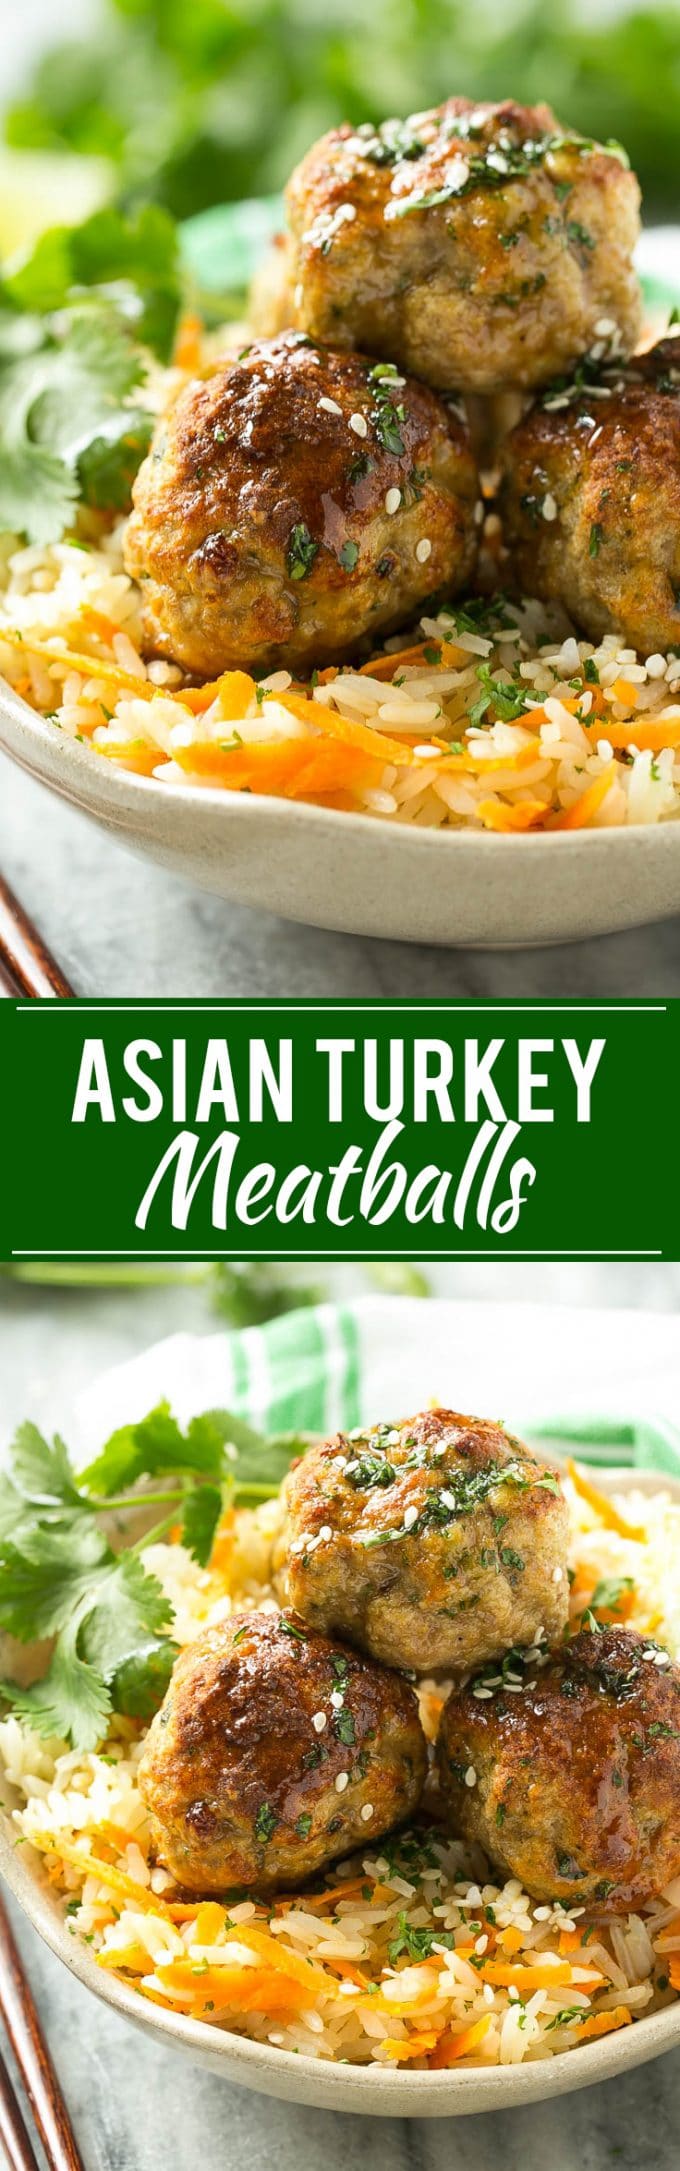 Asian Turkey Meatballs and Carrot Rice Recipe | Asian Turkey Meatballs | Carrot Rice | Best Asian Meatballs | Easy Asian Meatballs | Honey Garlic Sauce